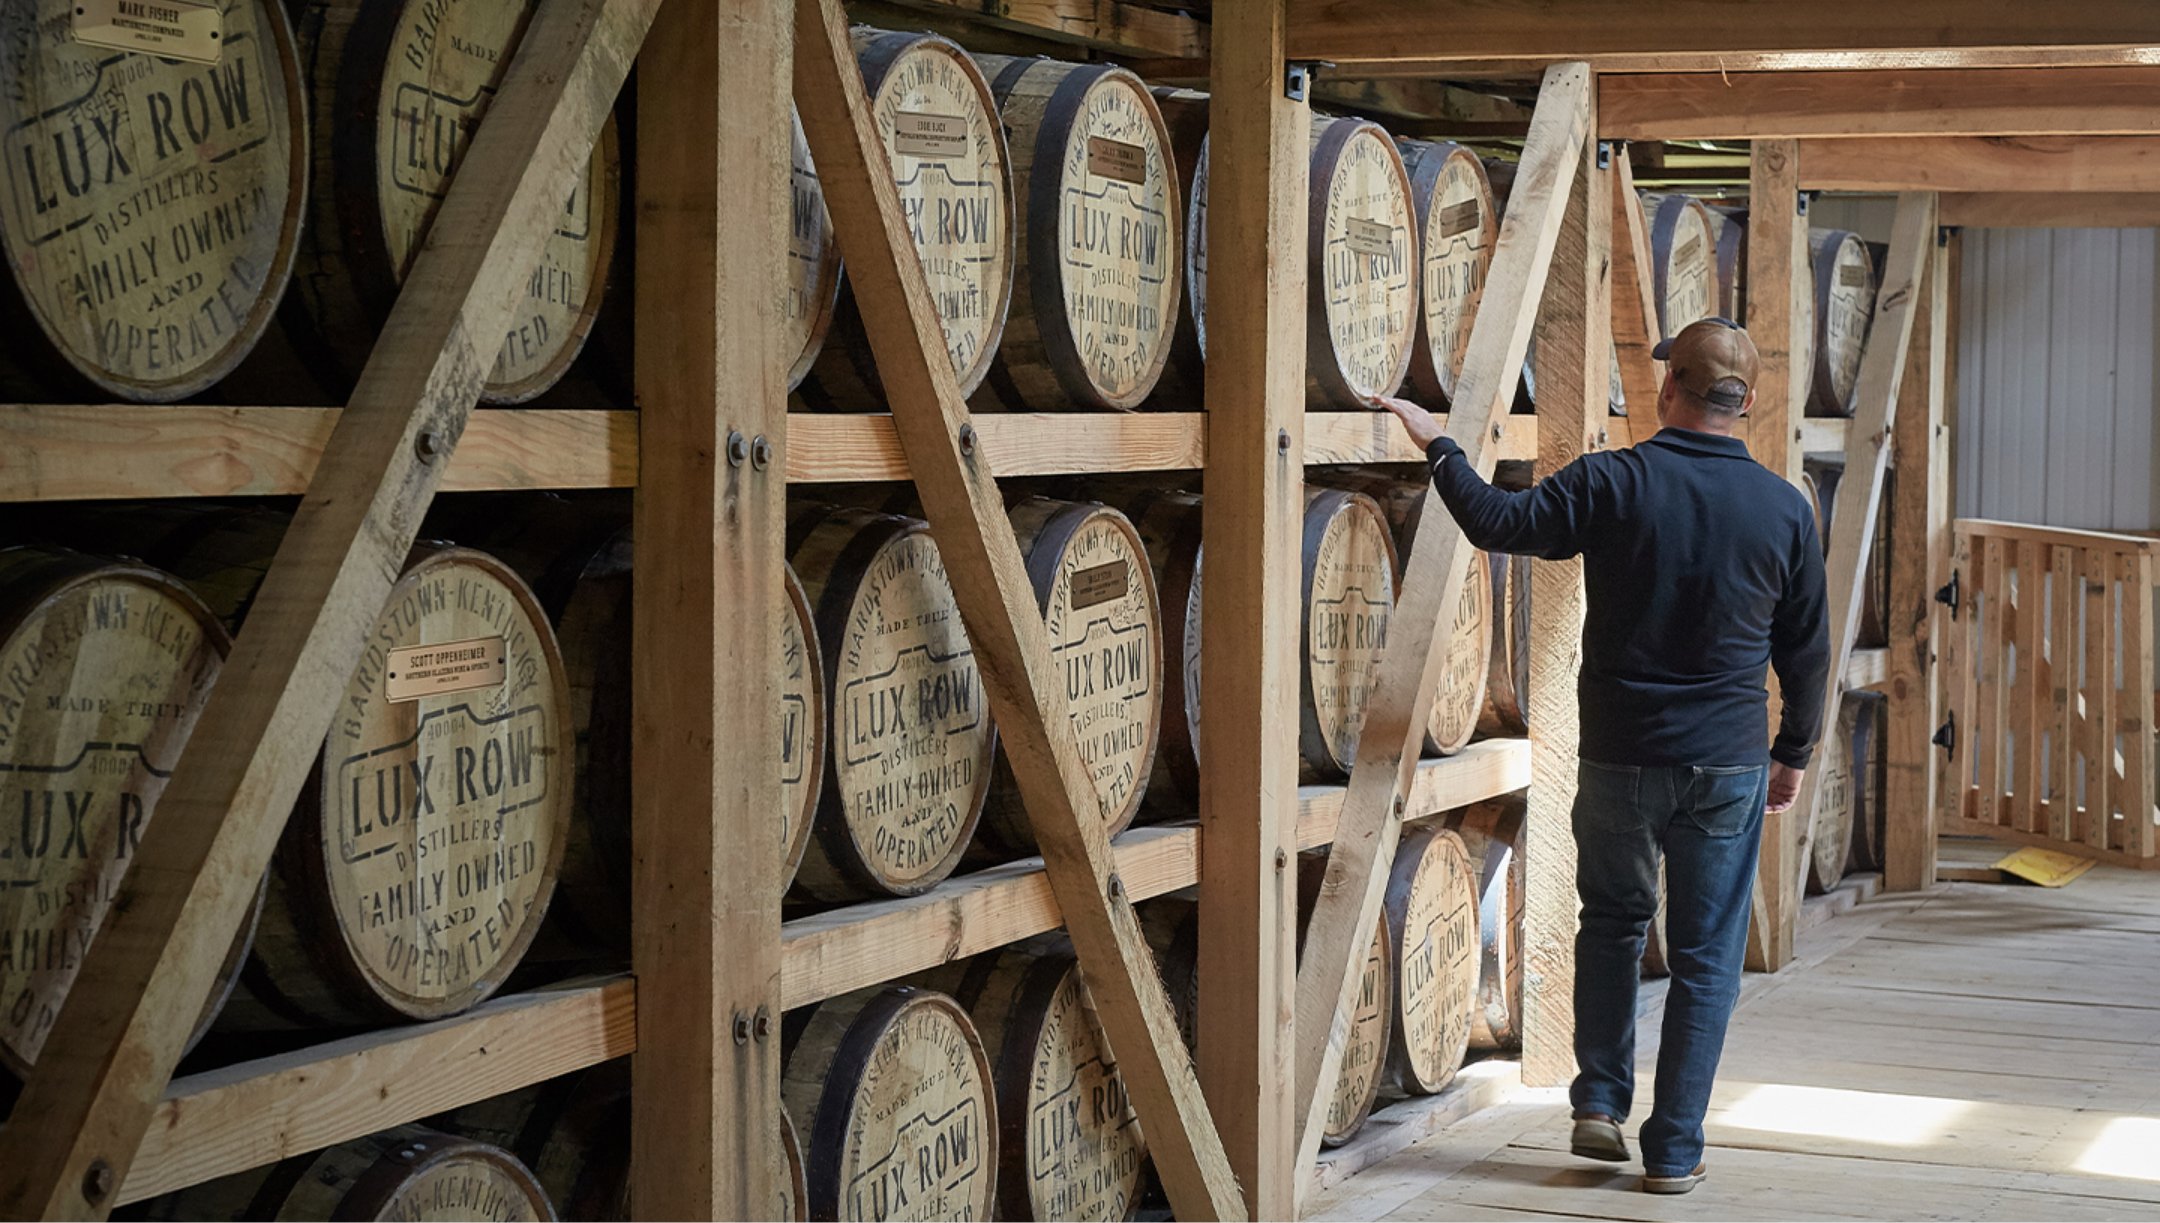 A distiller checks on the bourbon barrels at Lux Row Distilleries